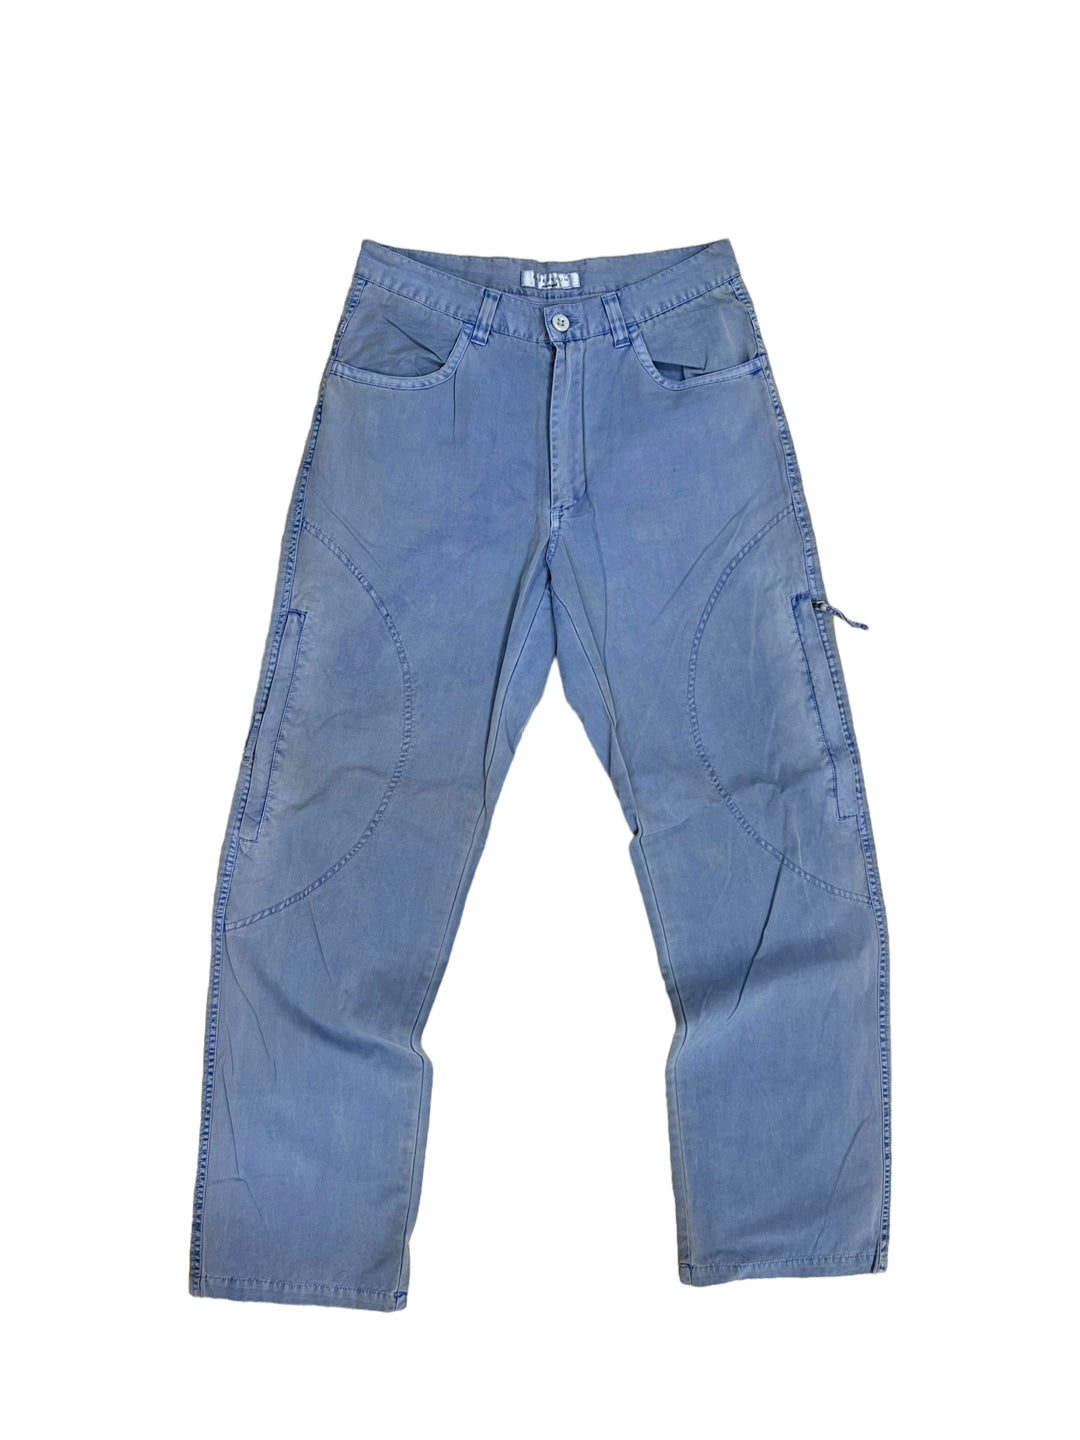 Vintage Side Zip Pockets Pants Men’s Small